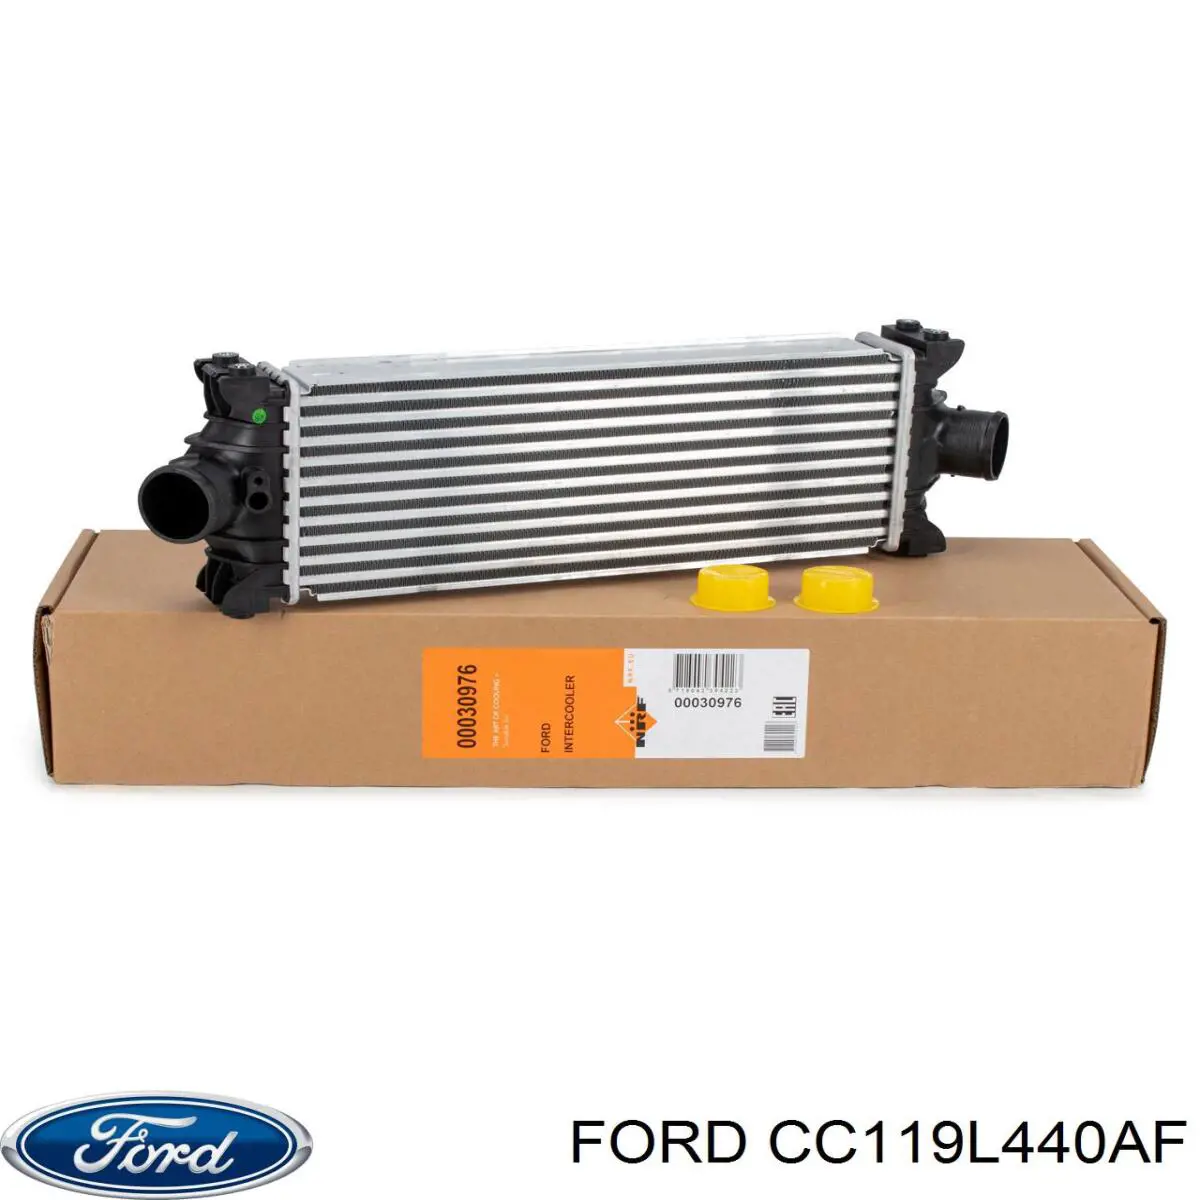 CC119L440AF Ford intercooler